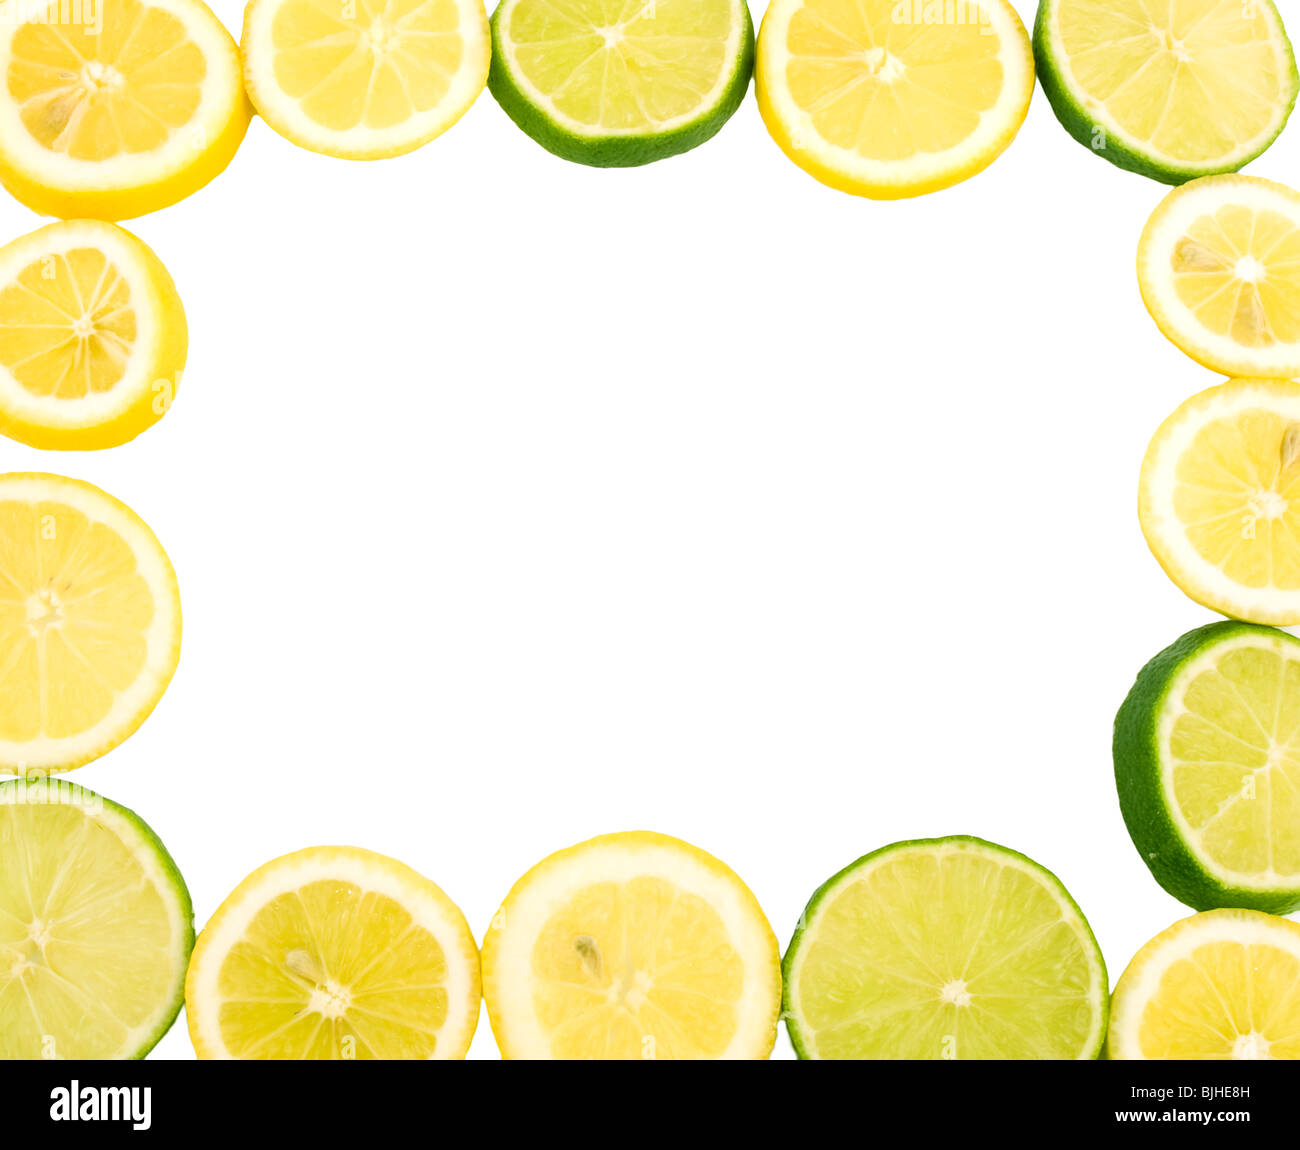 Lemon frame on white background Stock Photo